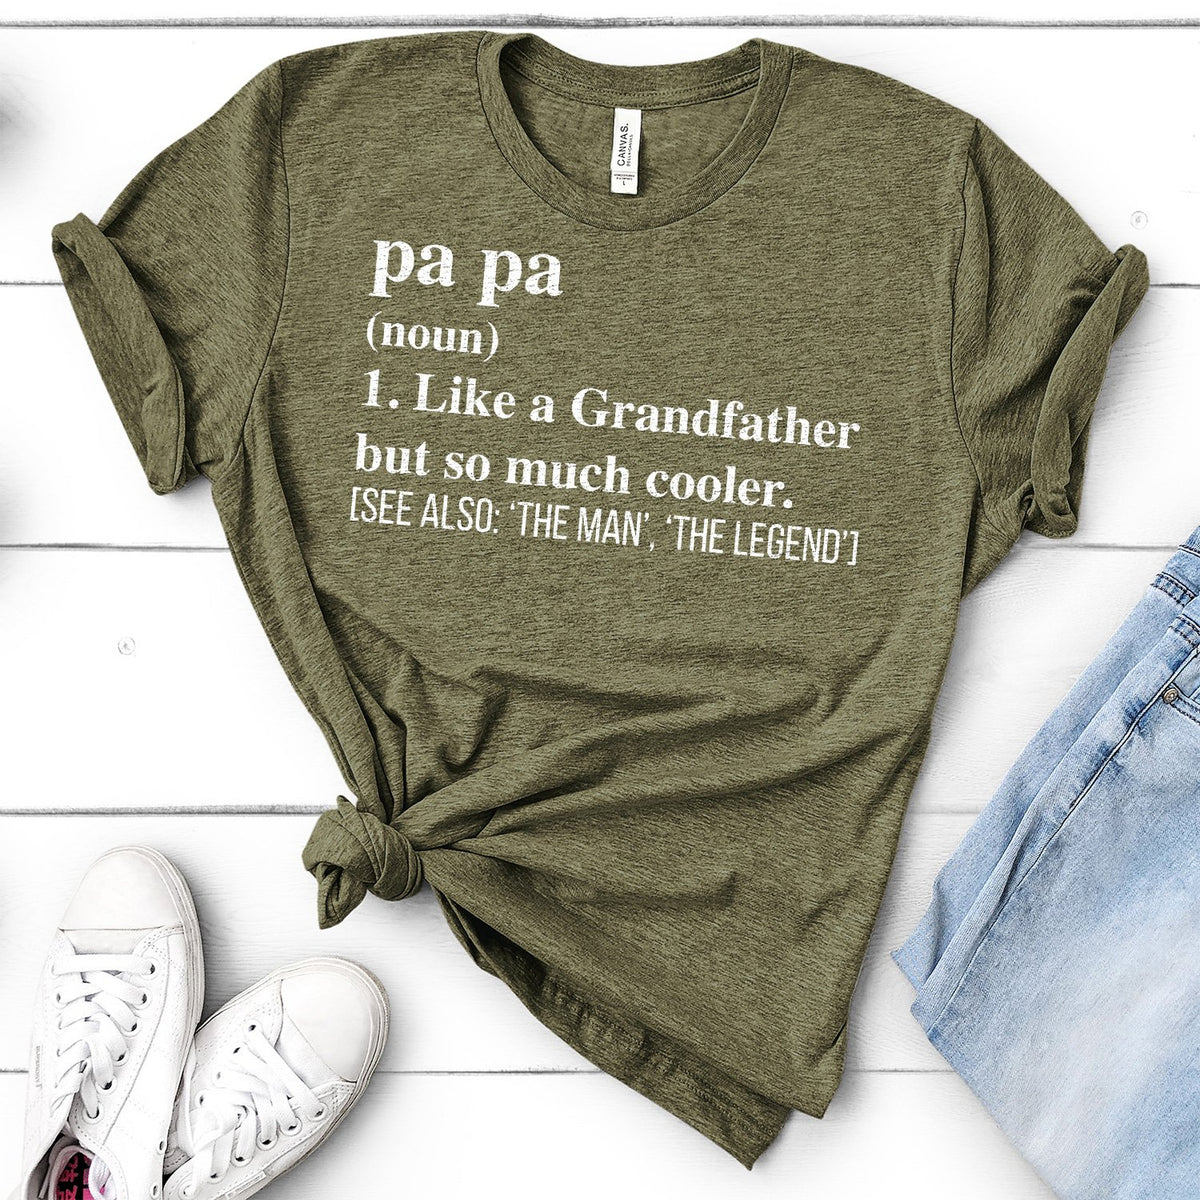 Pa Pa (Noun) 1. Like A Grandfather But So Much Cooler - Short Sleeve Tee Shirt